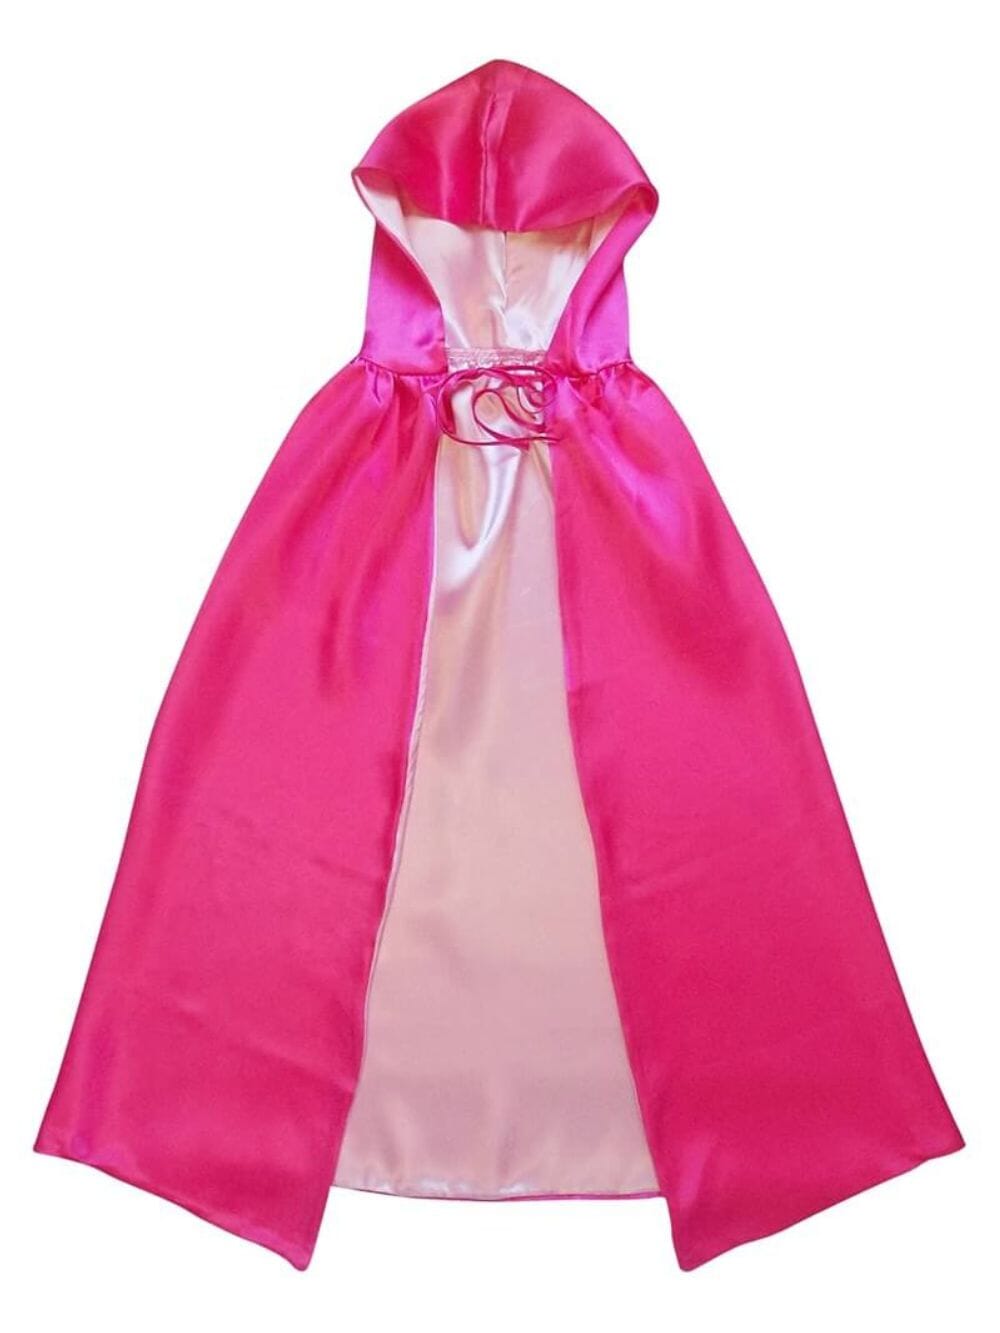 Hot Pink & Pink Hooded Cape, Superhero or Princess Reversible Hooded Cloak - Sydney So Sweet